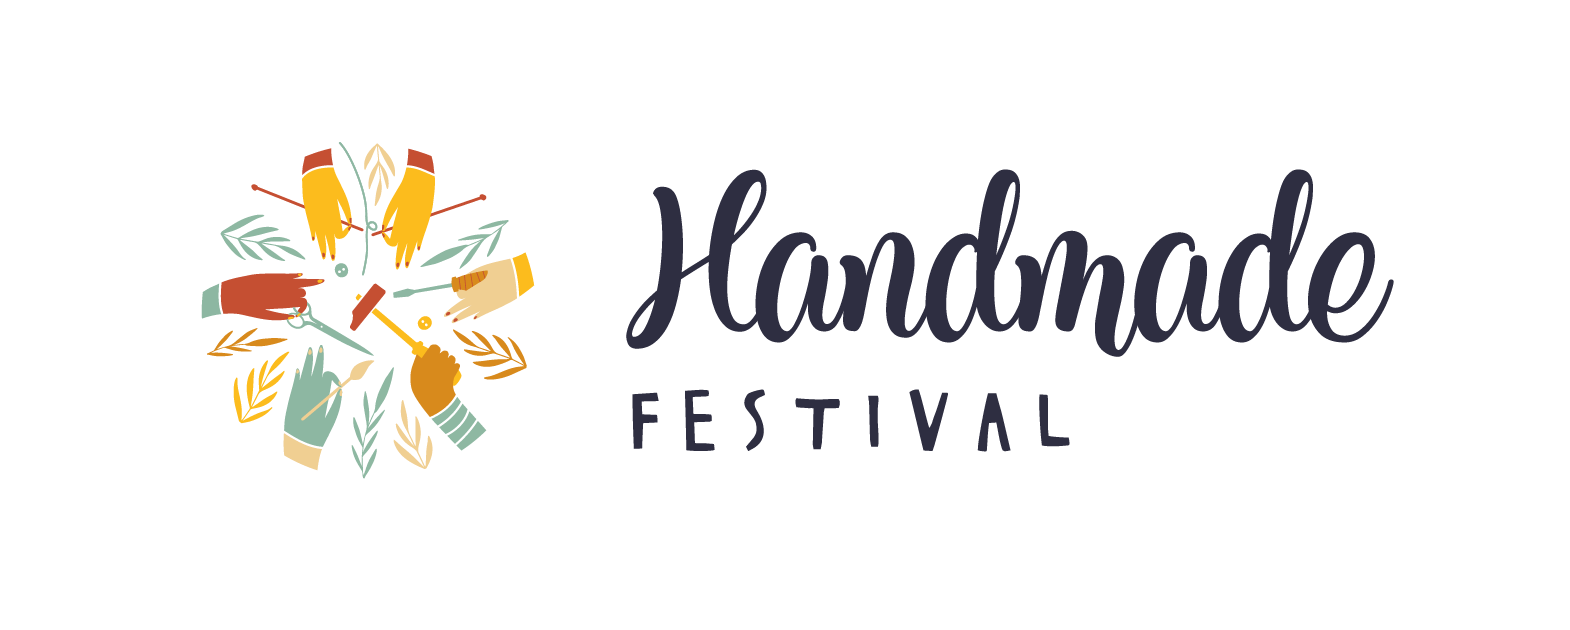 (c) Handmadefestivalbcn.com